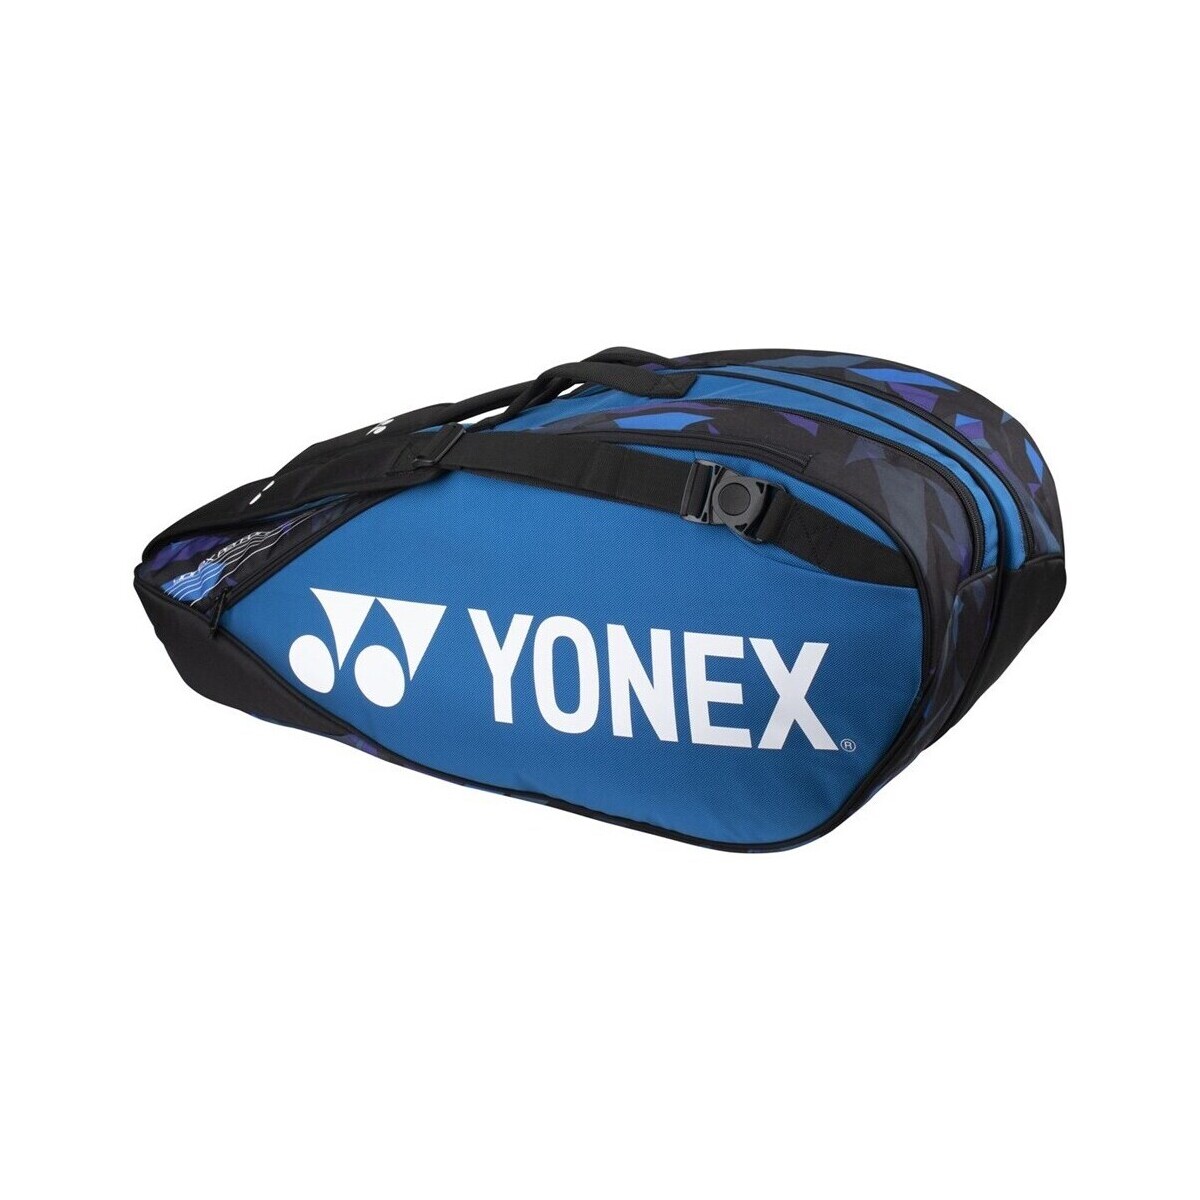 Genti Genti  Yonex Thermobag Pro Racket Bag 6R Albastre, Negre